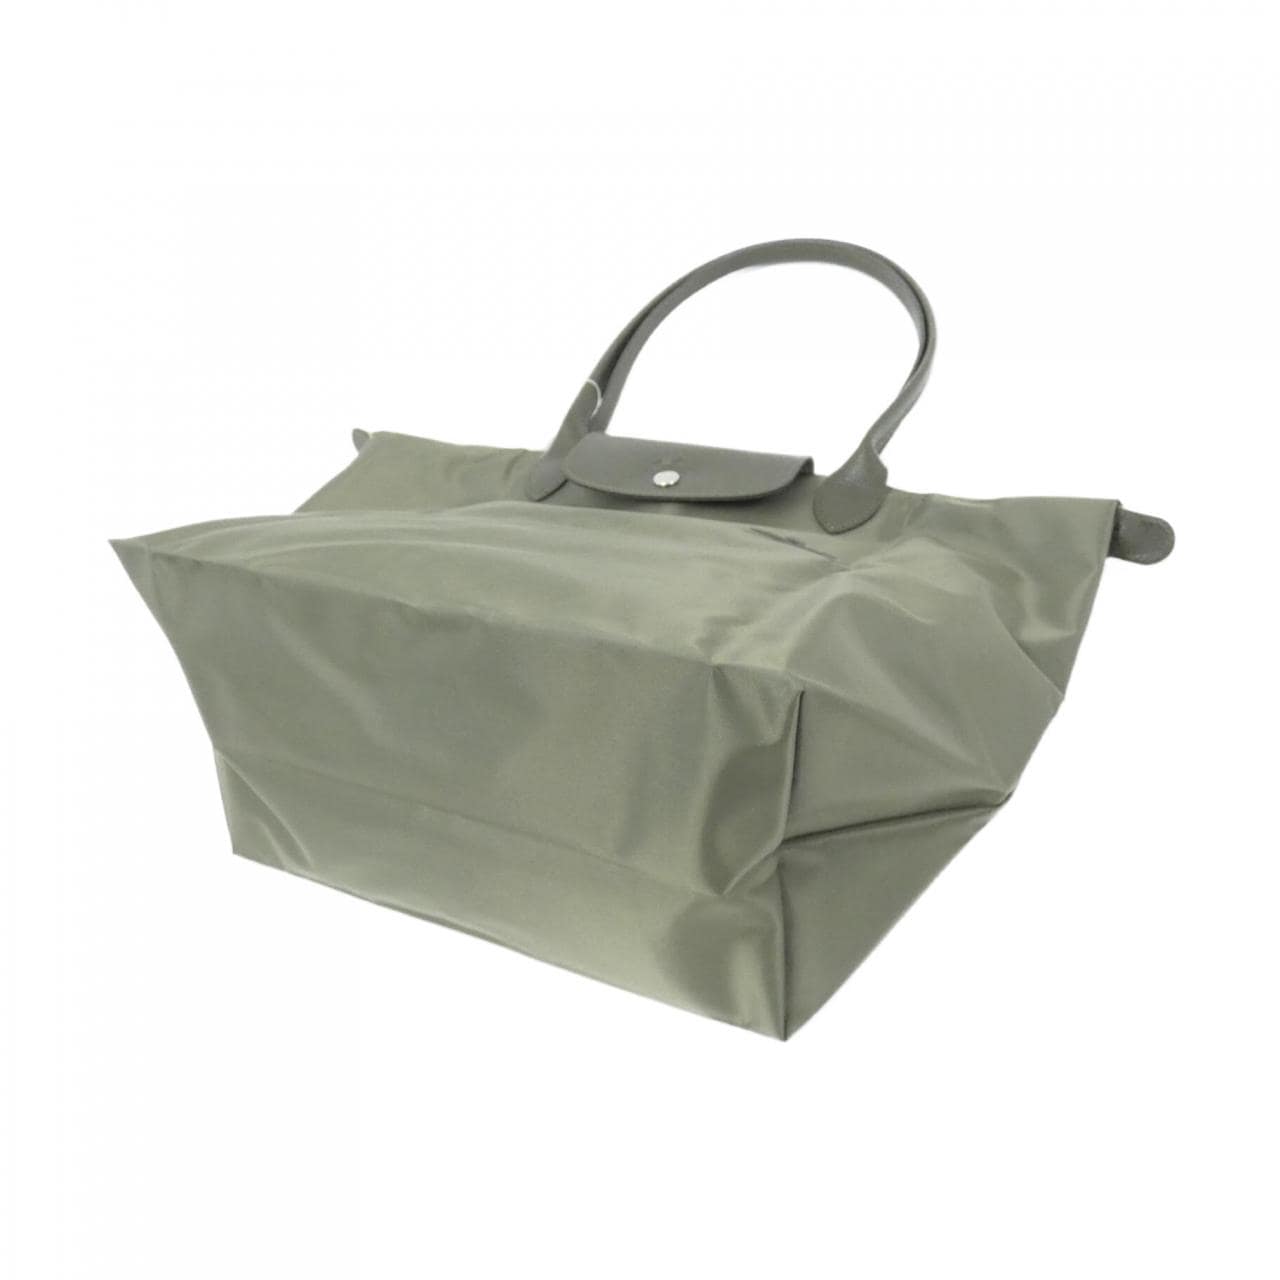 [BRAND NEW] Longchamp Le Pliage Green 1899 919 Shoulder Bag